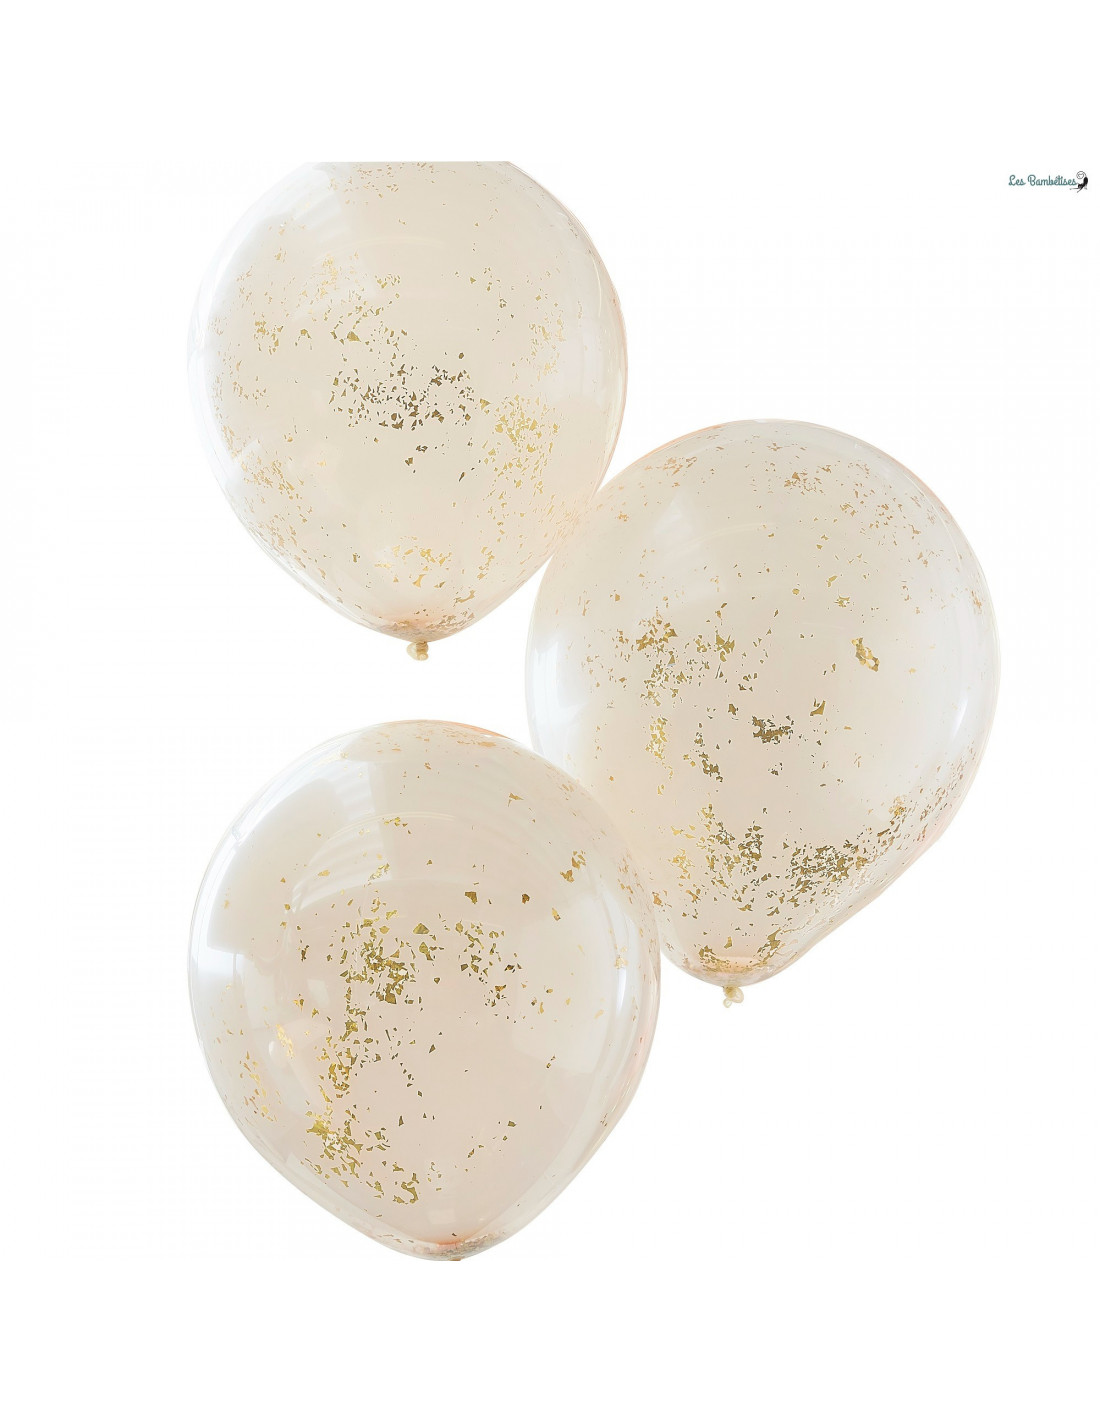 3 Grands Ballons Confettis Doubles Pêche Confettis Or - Les Bambetises